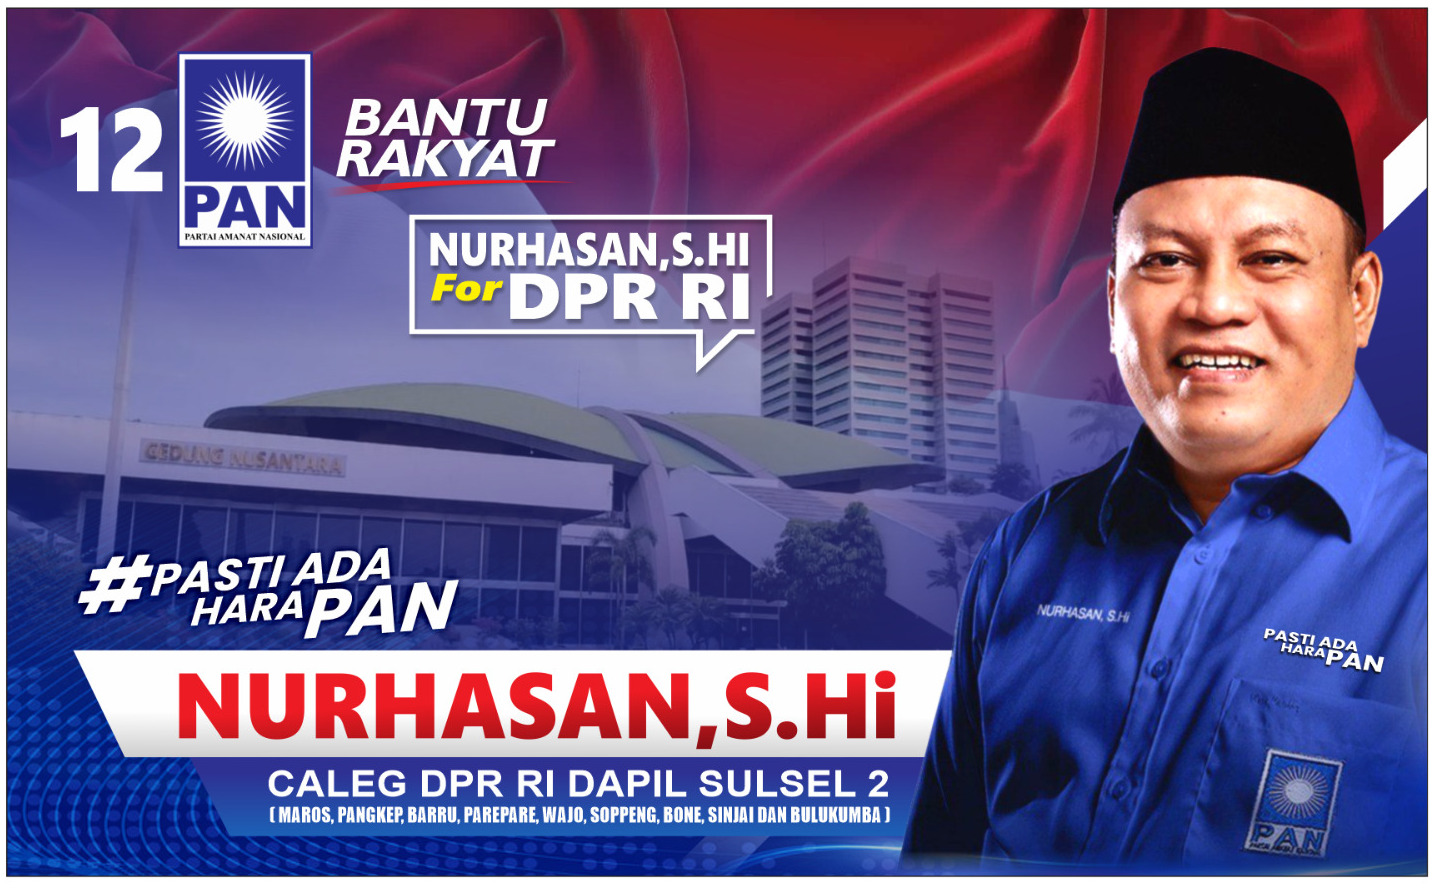 Nurhasan, S.HI Caleg DPR RI Nomor Urut 2 Partai PAN Daerah Pemilihan Sulsel 2